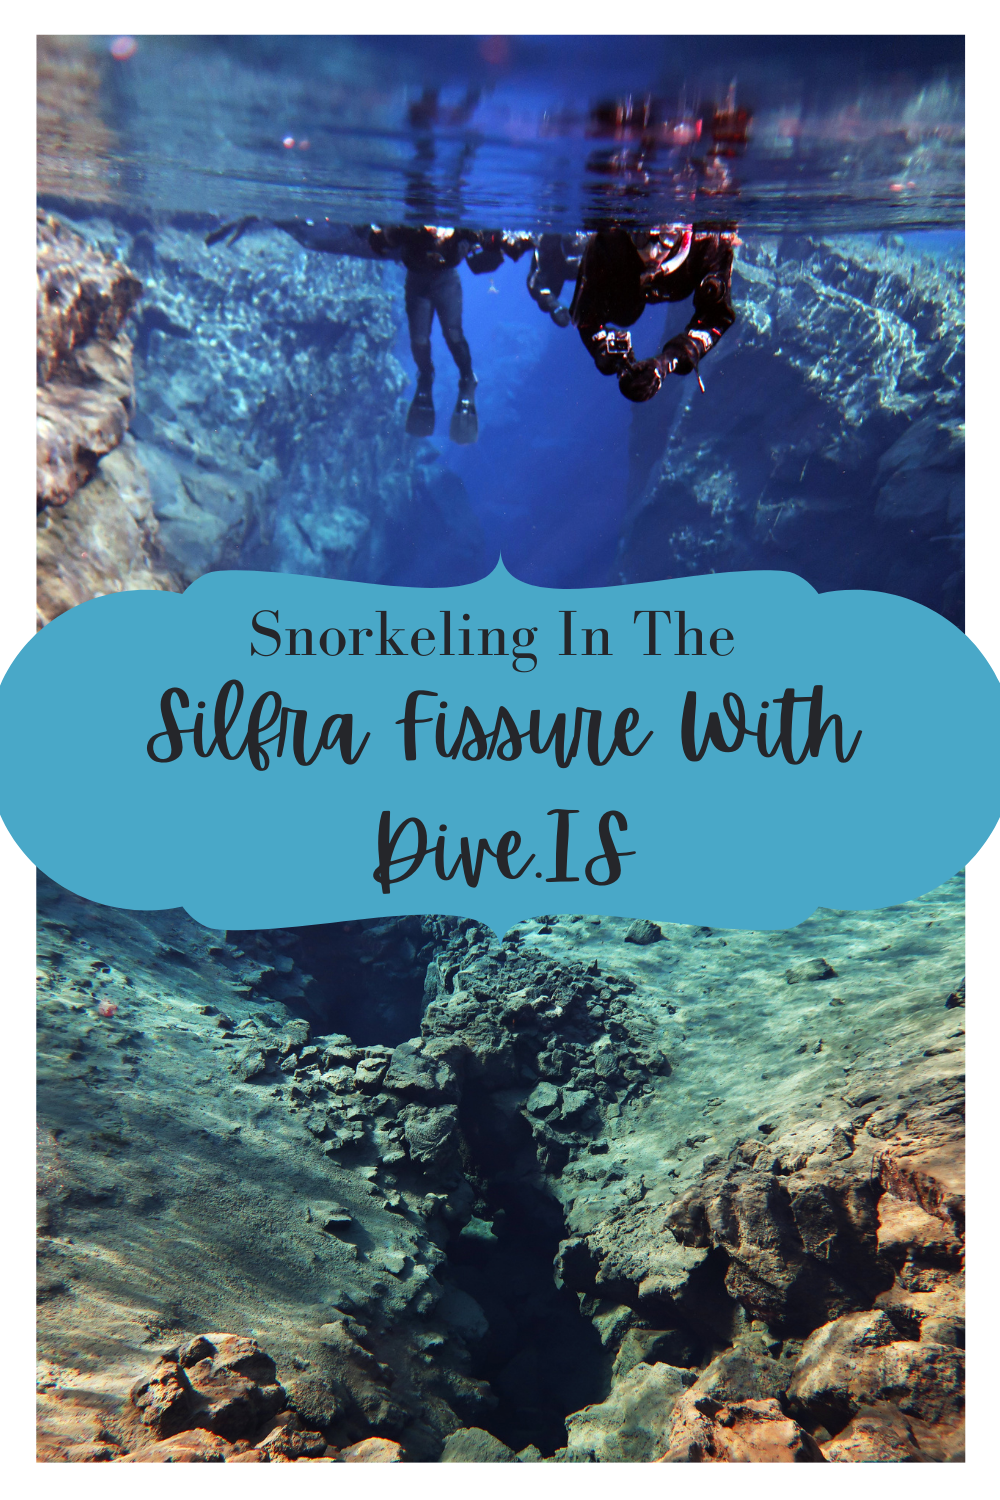 Snorkeling in Silfra Fissure